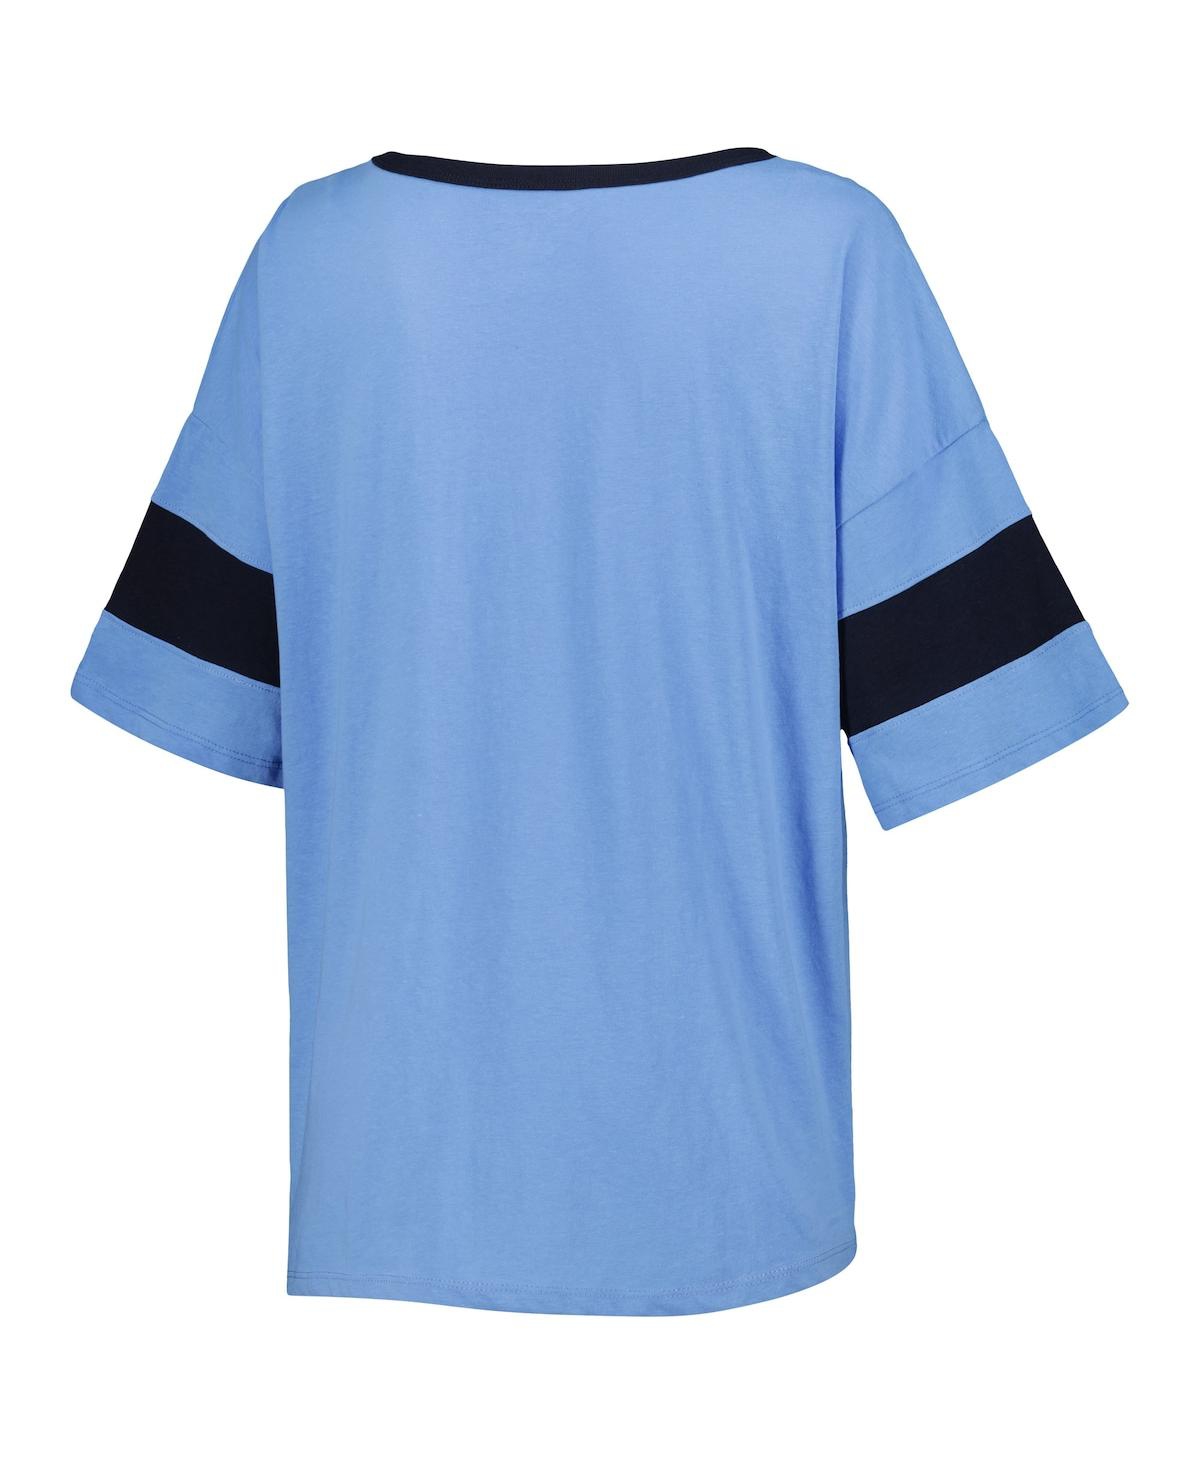 Shop Champion Women's  Carolinaâ Blue North Carolina Tar Heels Jumbo Arch Striped Half-sleeve T-shirt